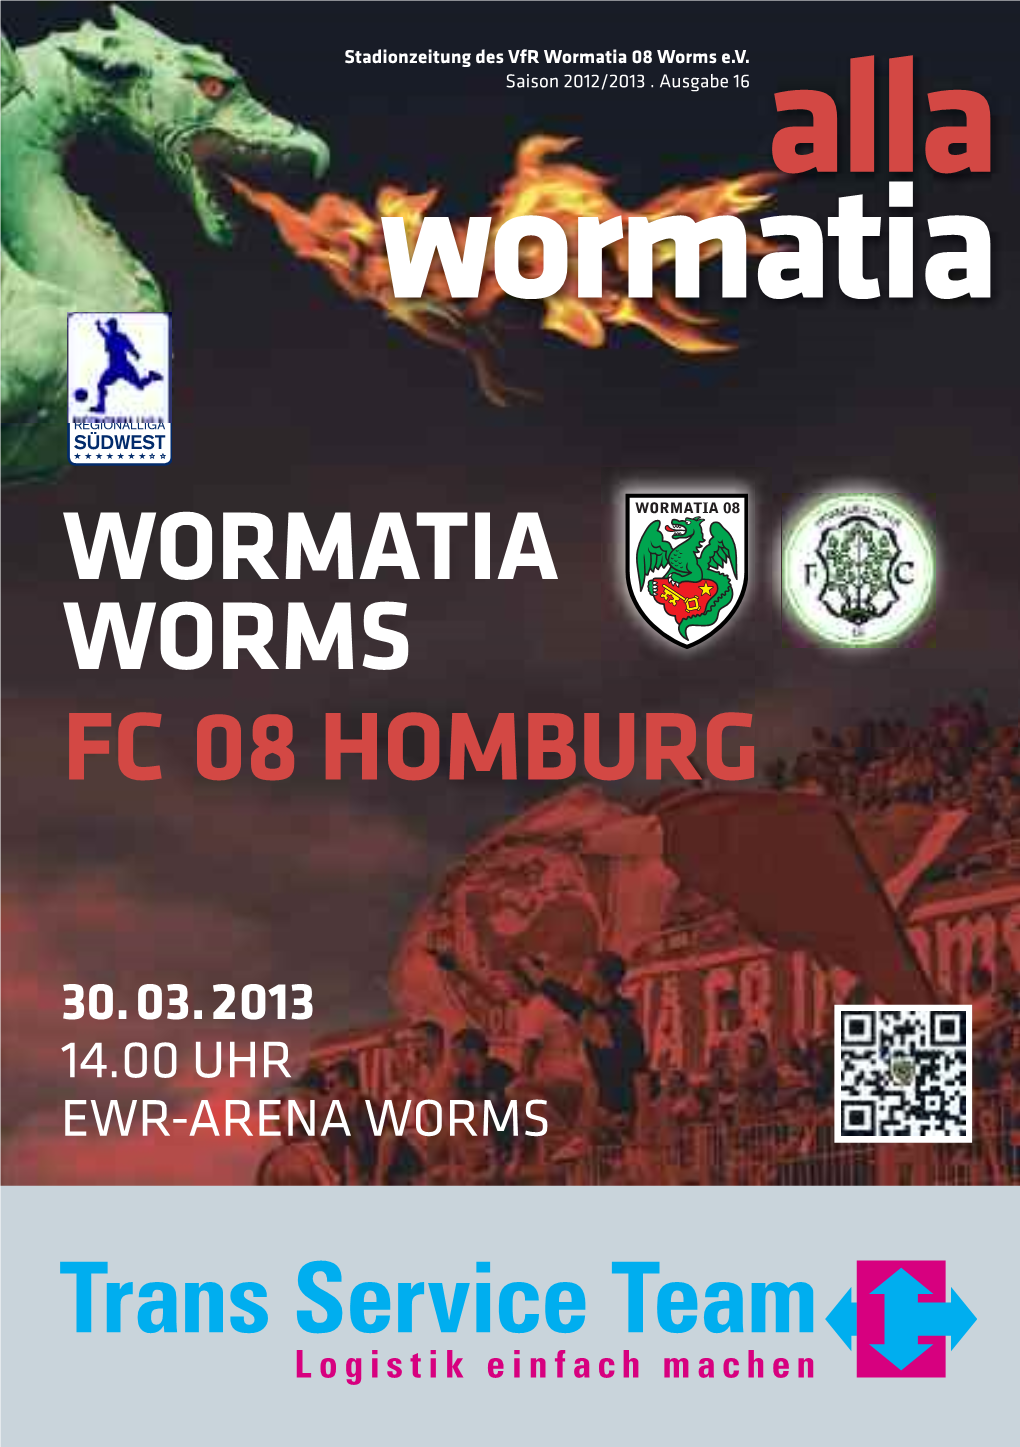 Wormatia Worms FC 08 Homburg